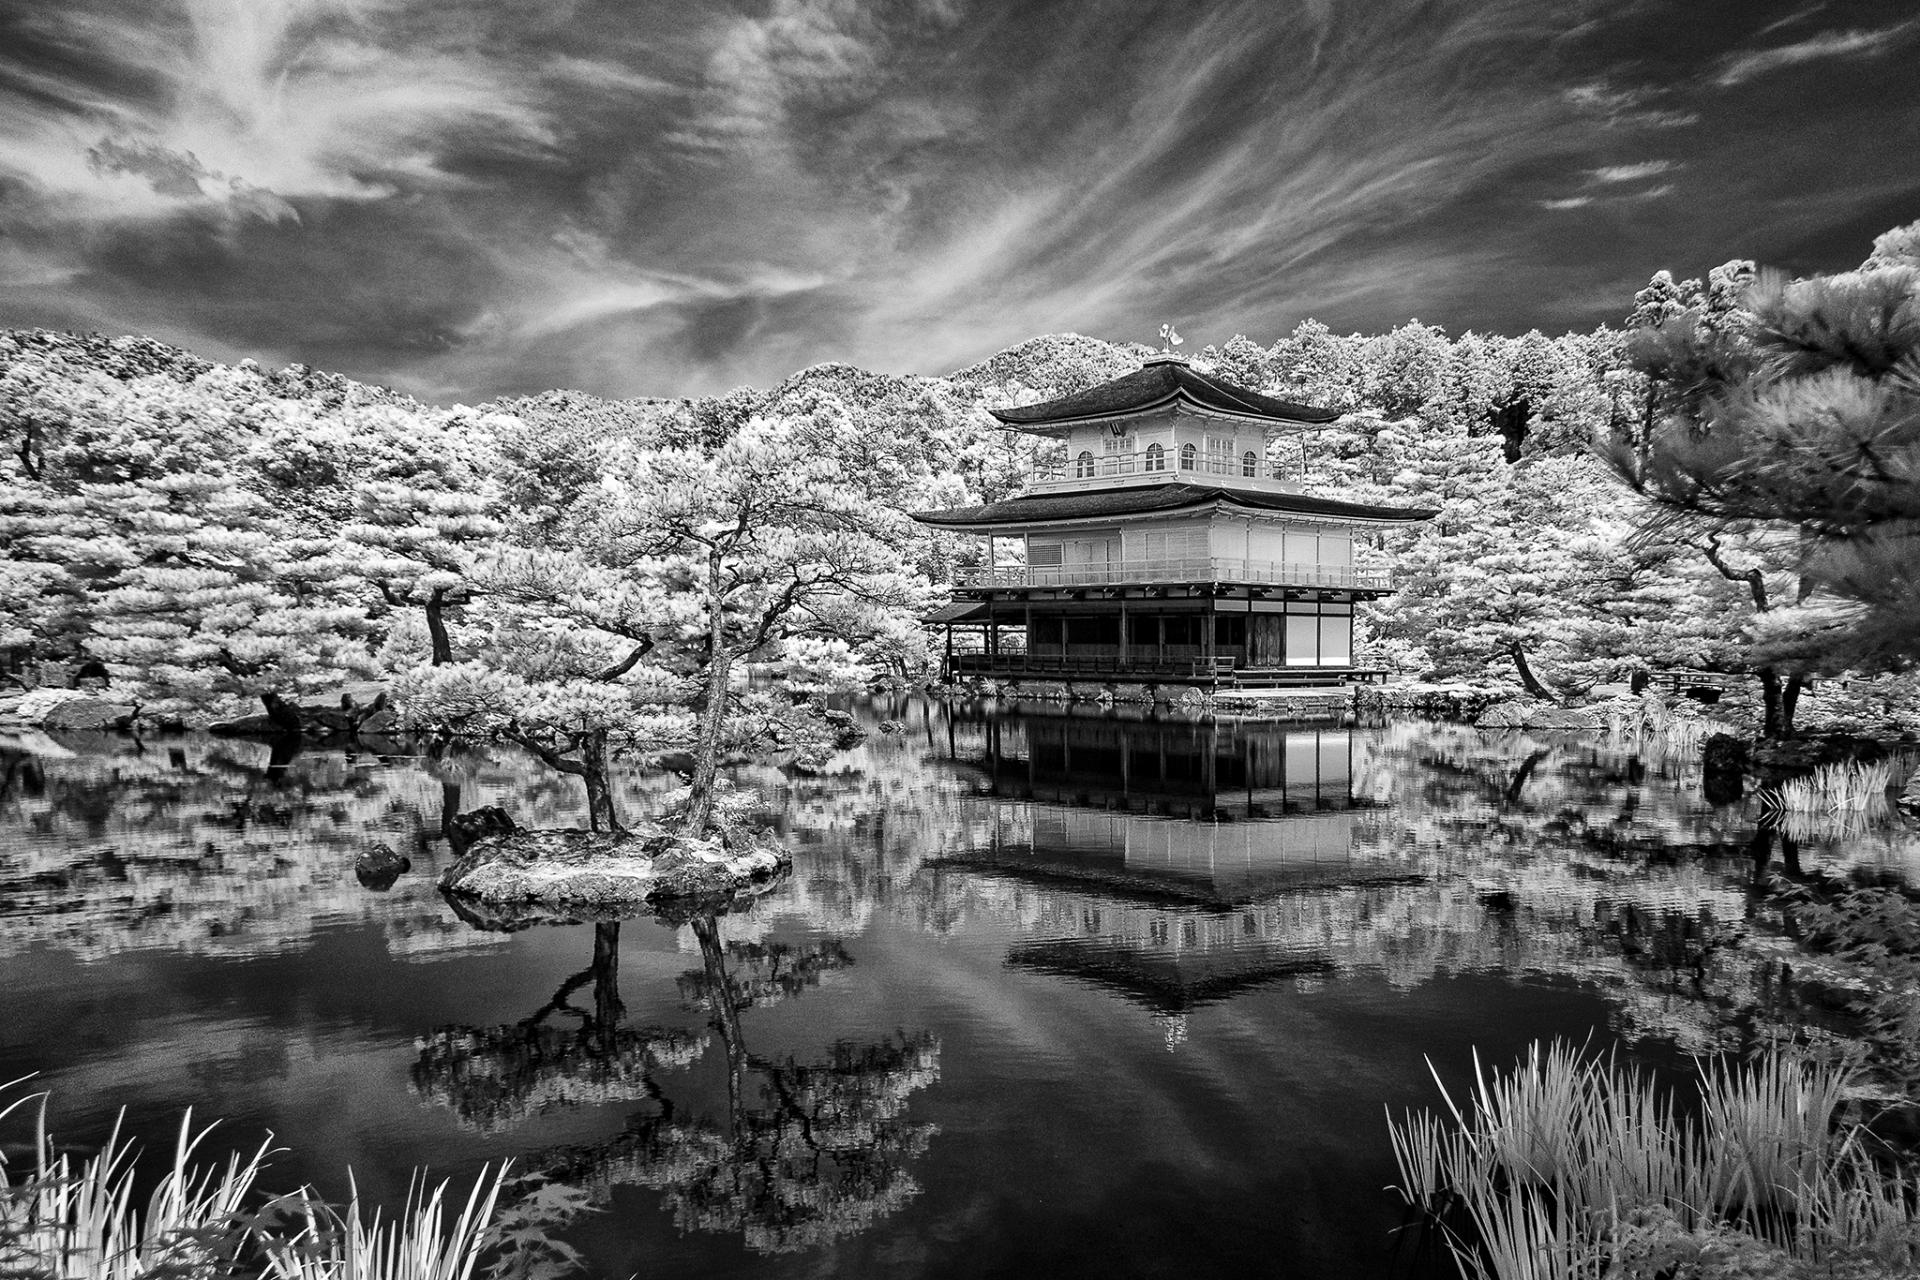 London Photography Awards Winner - Different  Kinkahu-ji Temple II